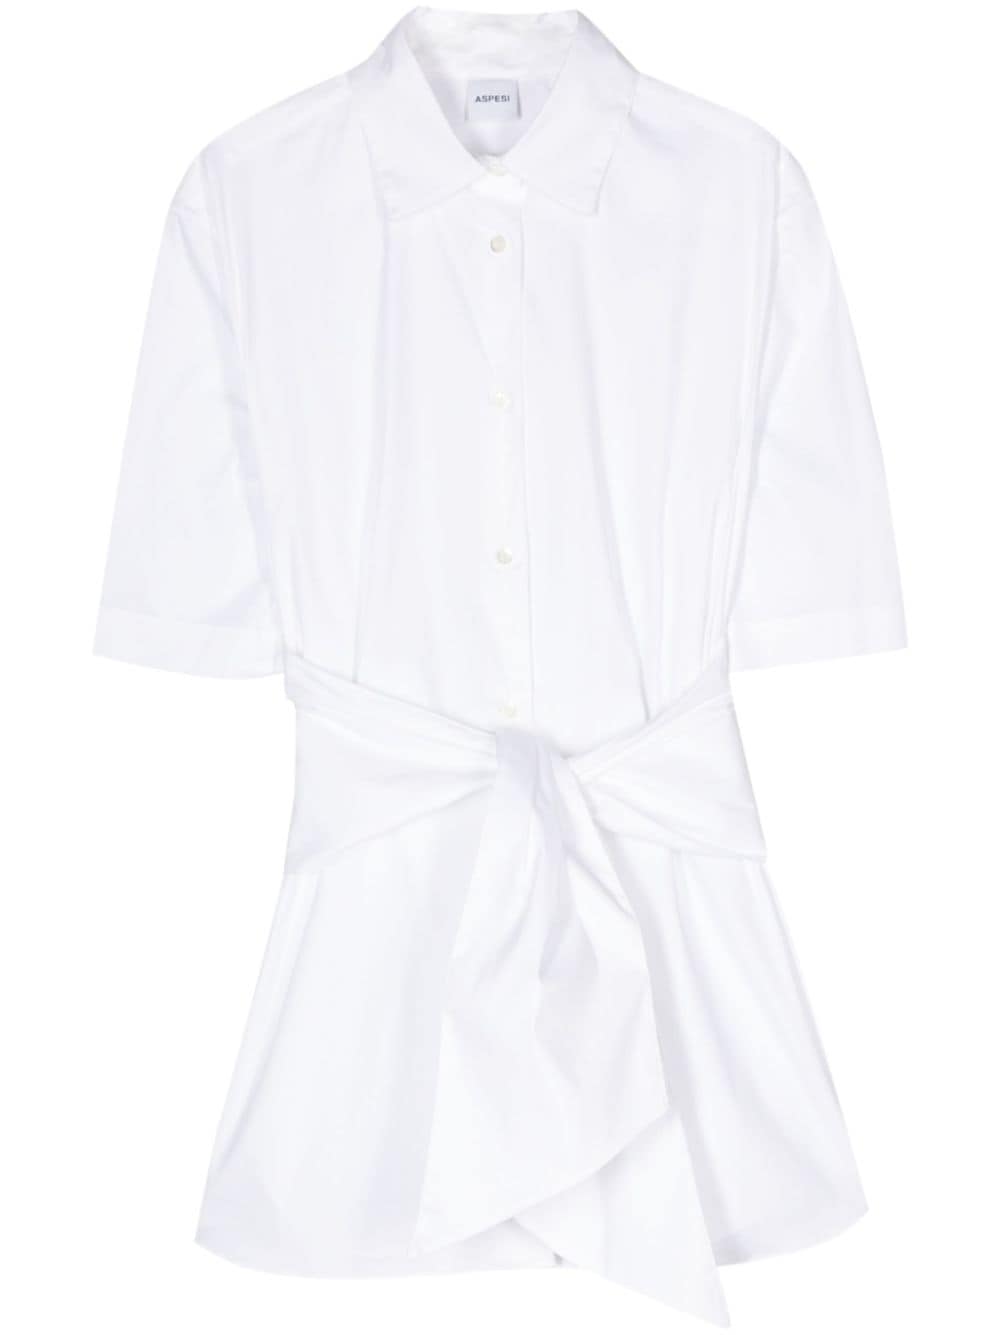 ASPESI lace-up detail poplin shirt - White von ASPESI